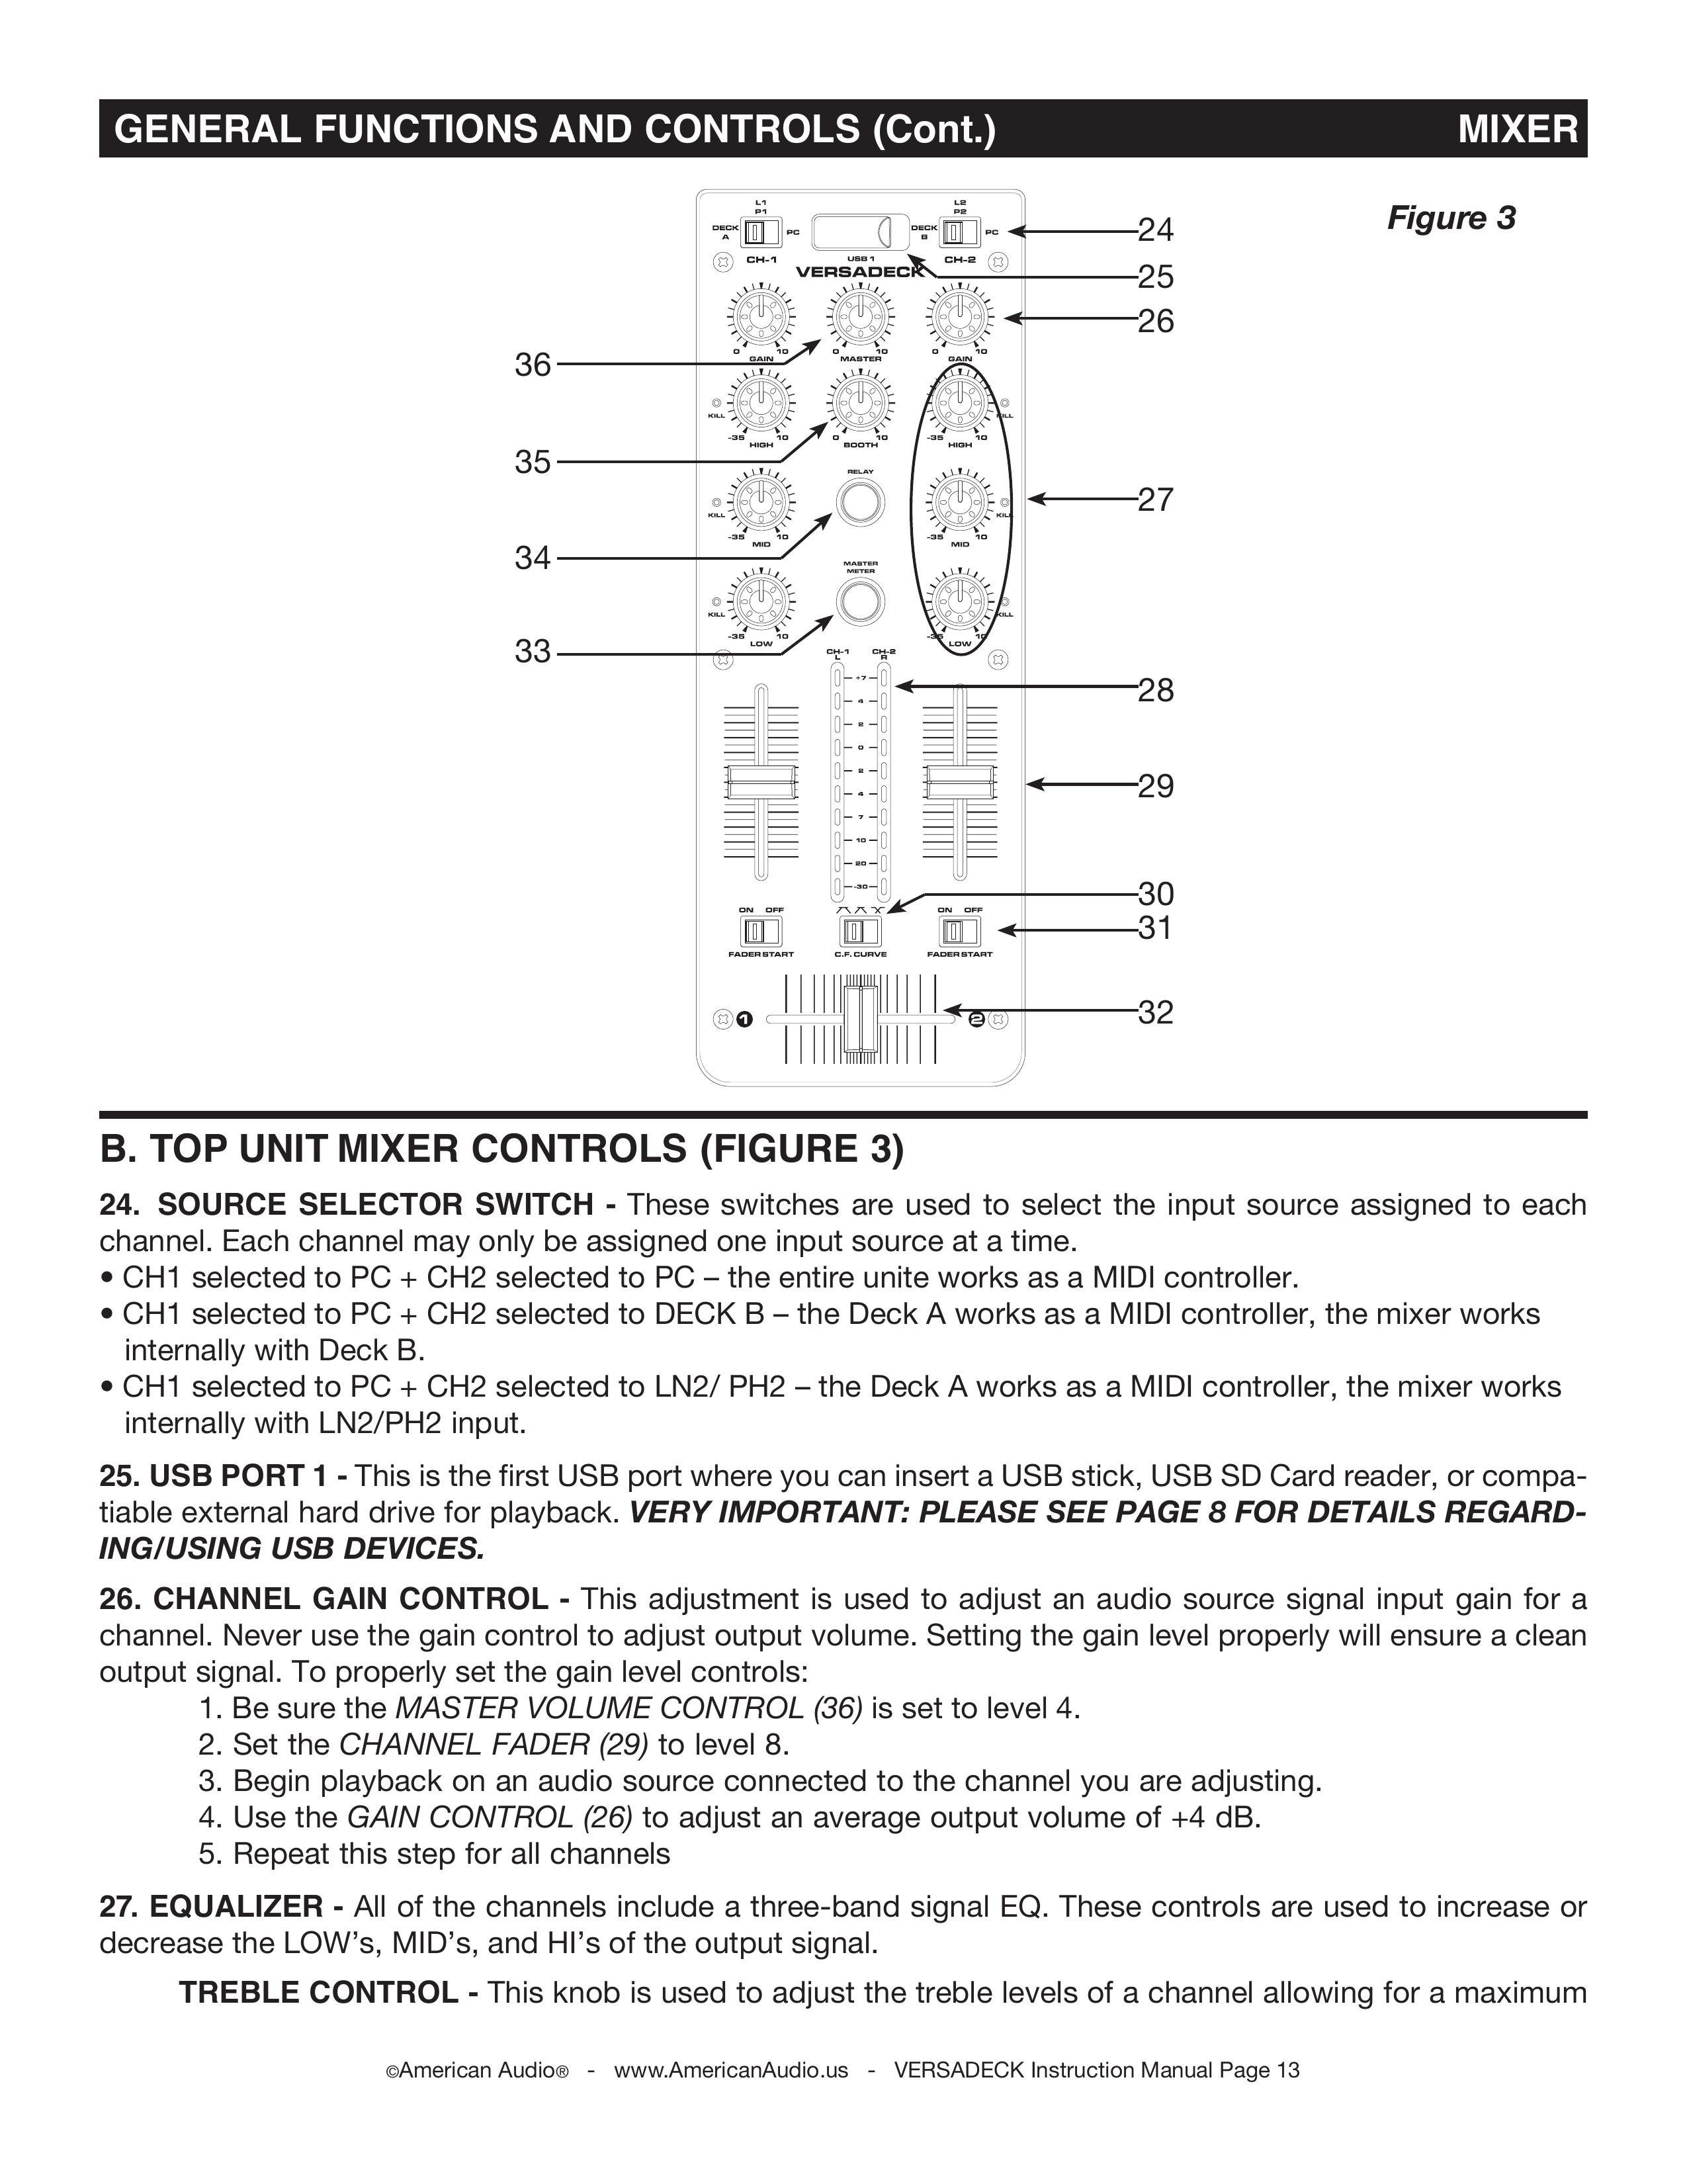 American Audio Versadeck DJ Equipment User Manual (Page 13)